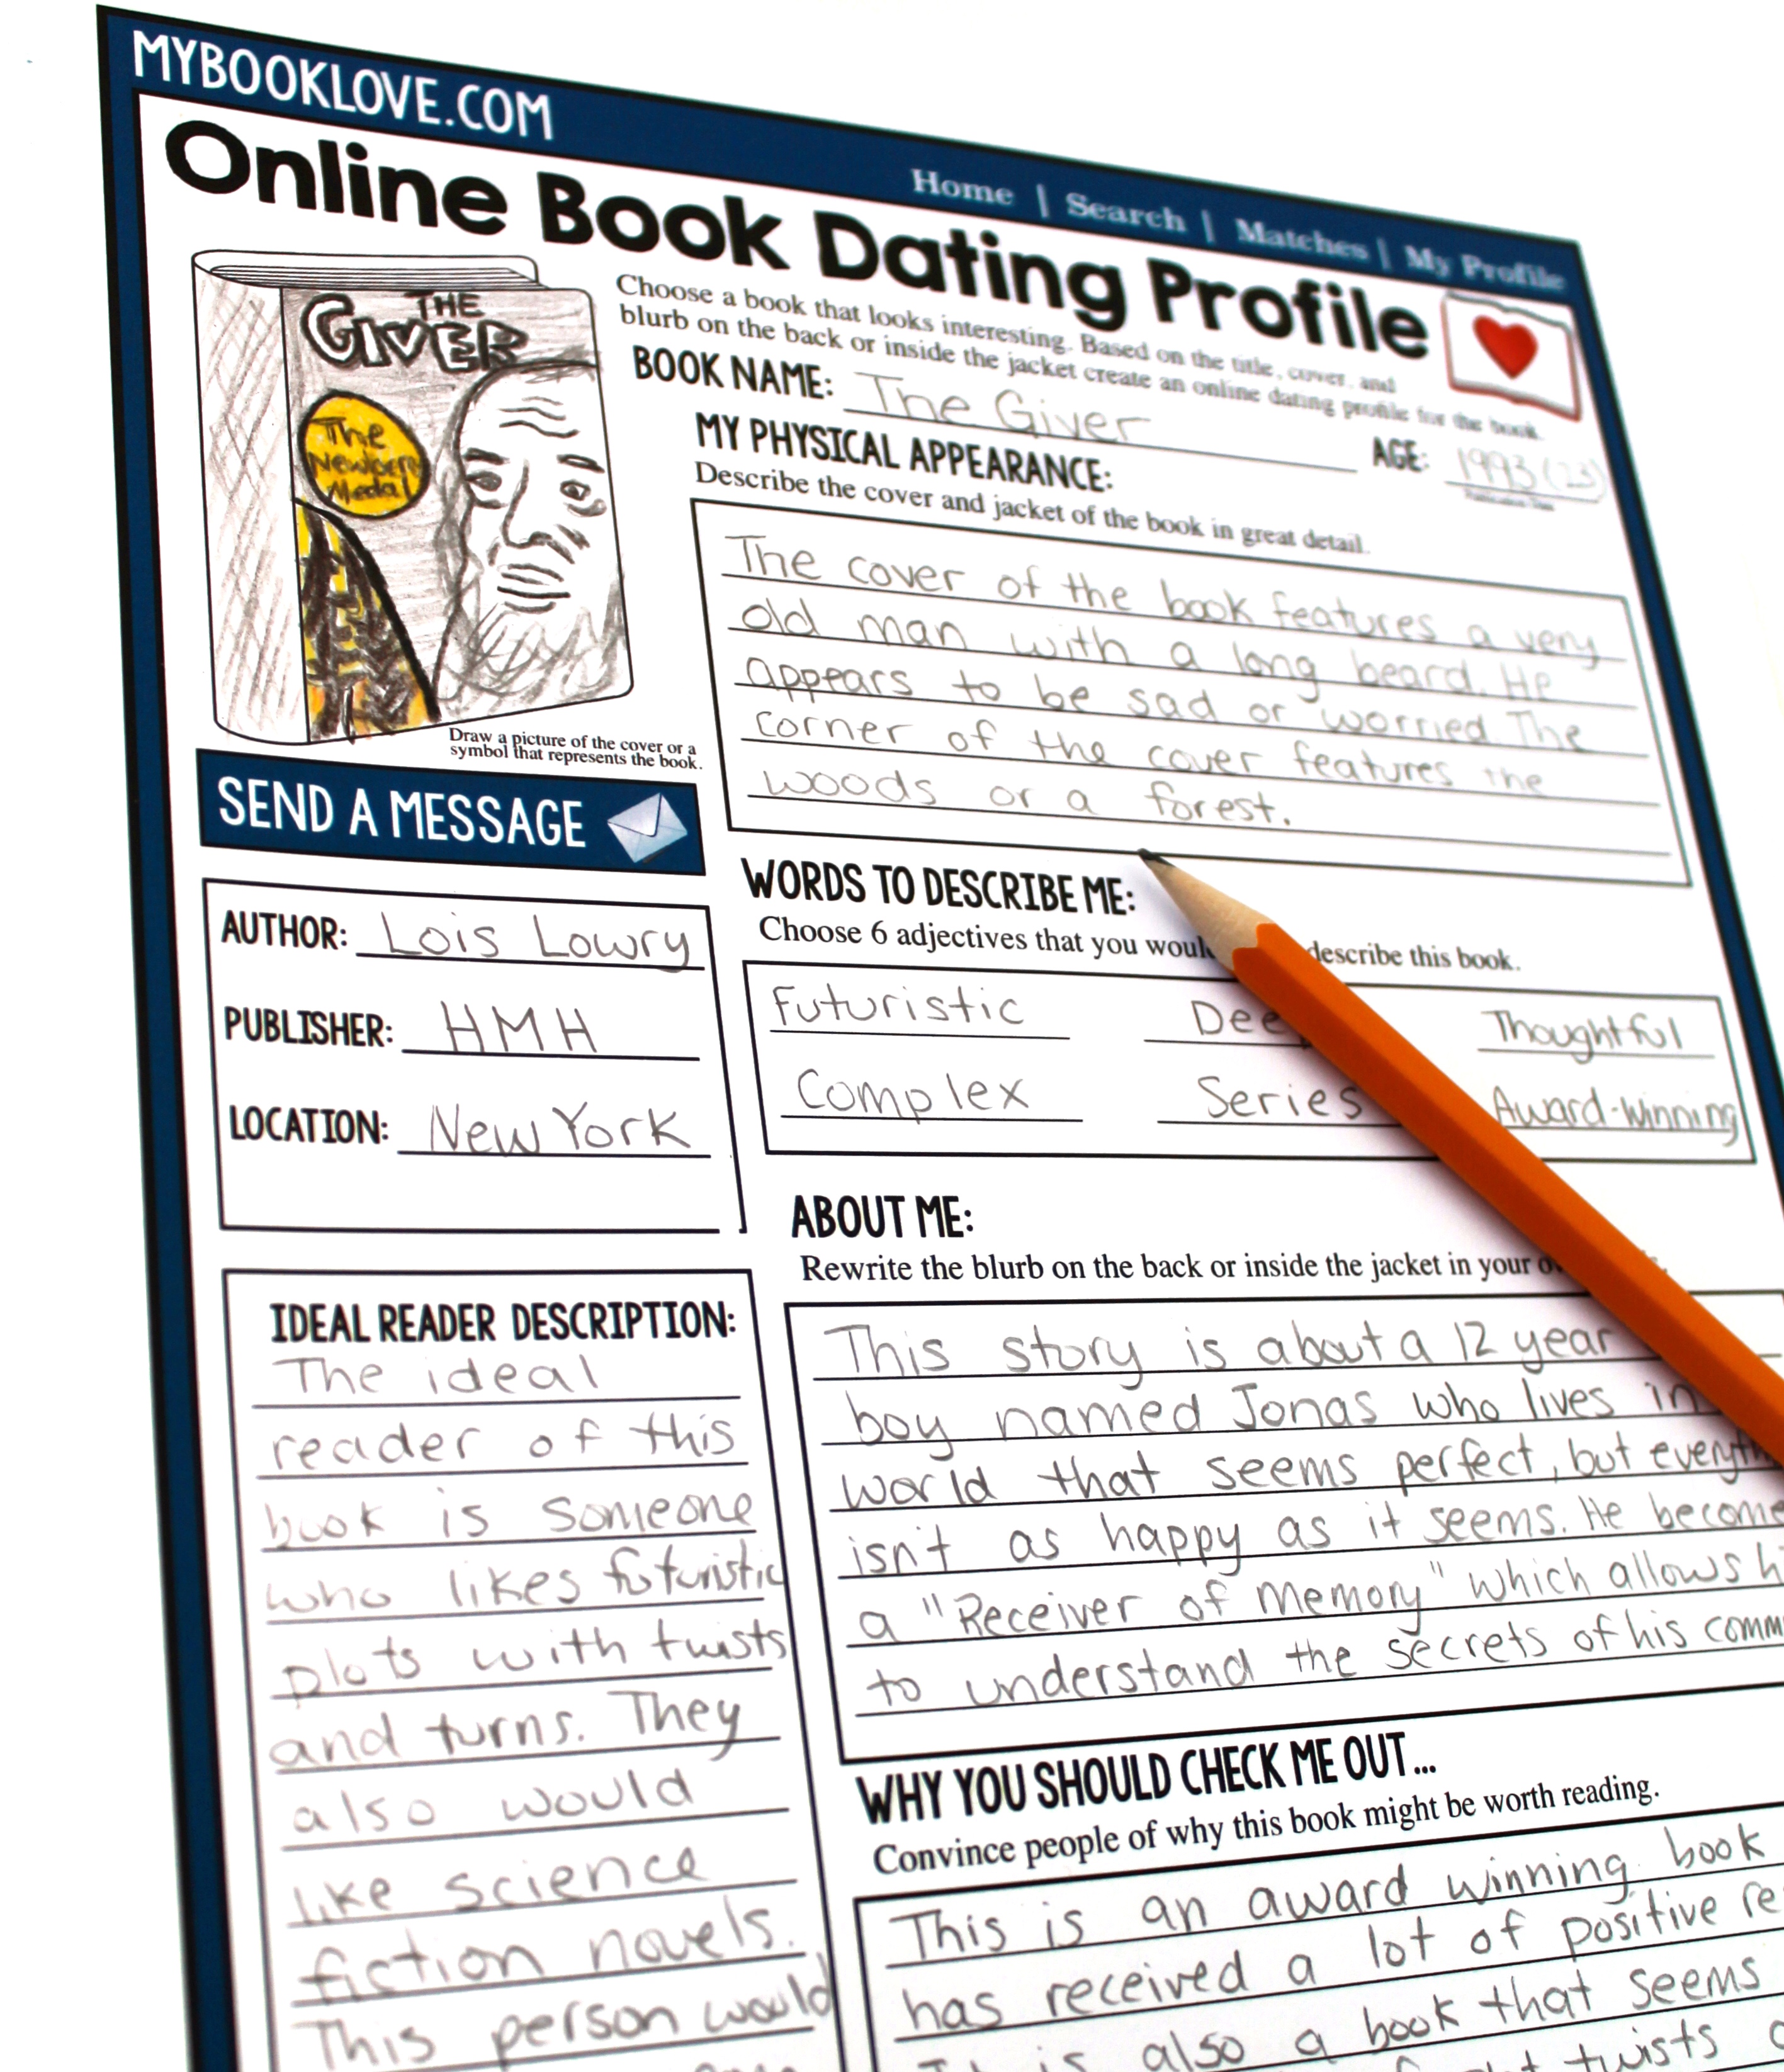 Best online dating profiles in Houston